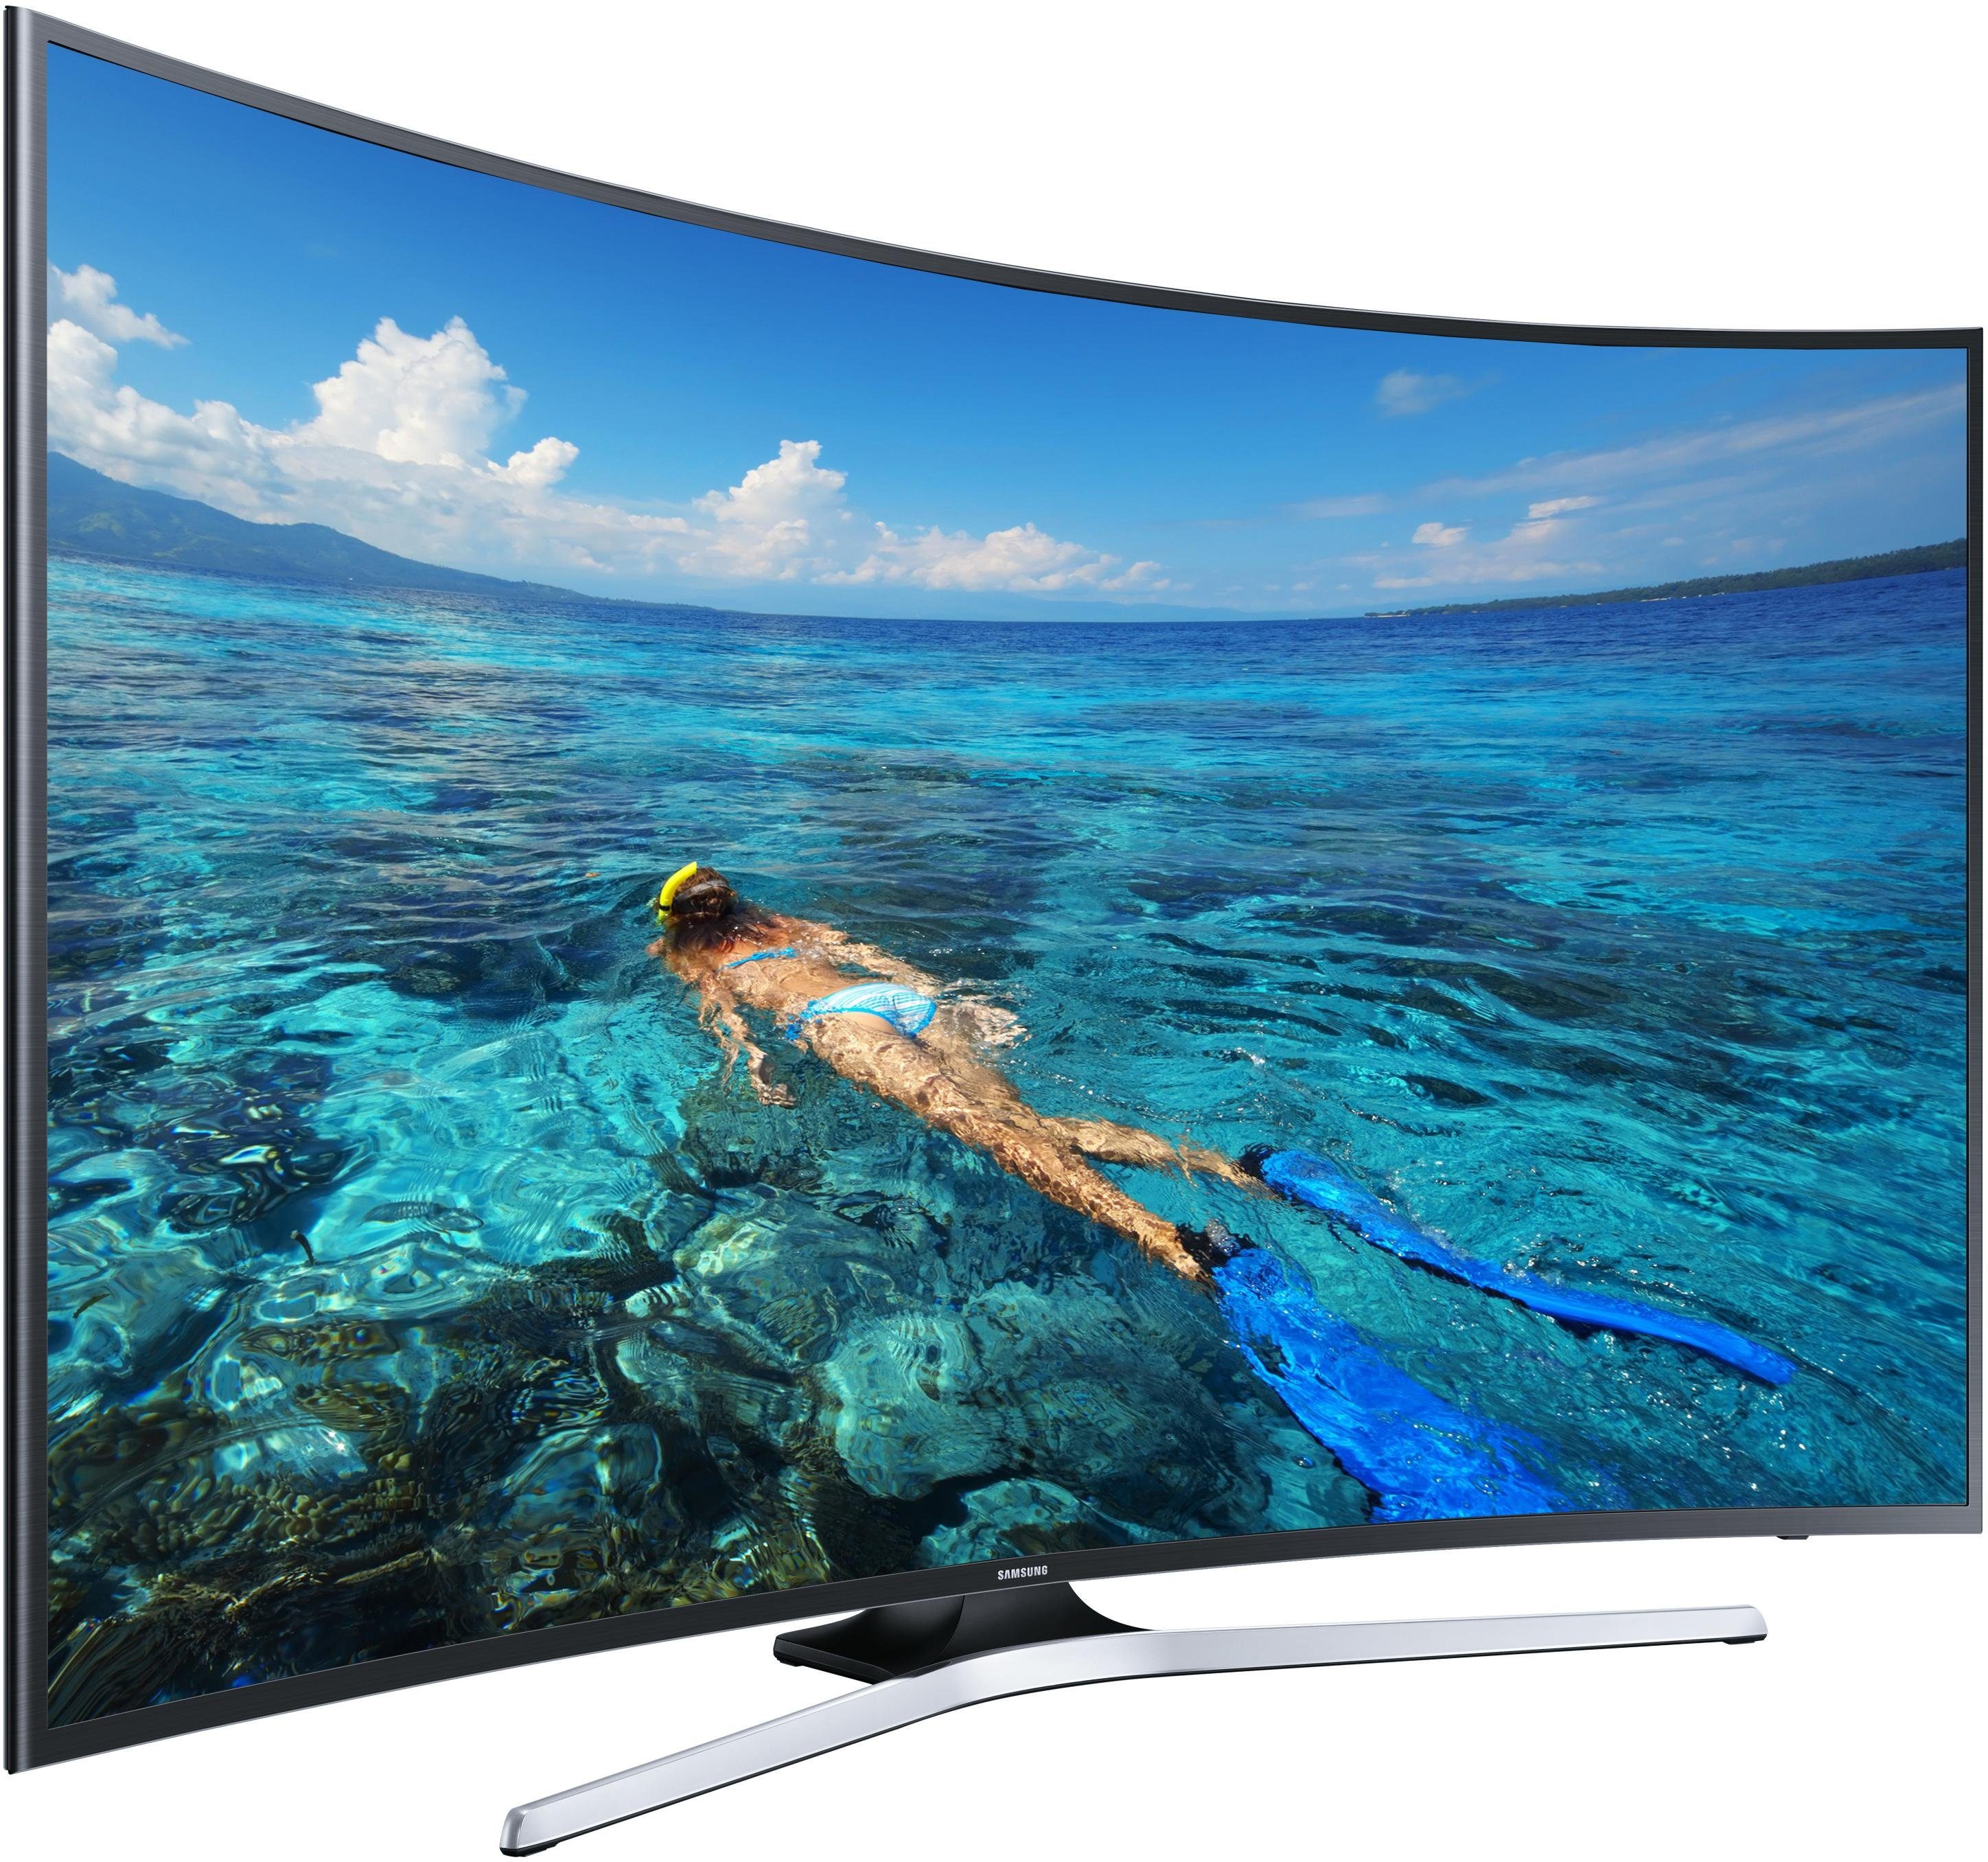 Телевизор 50 60 см. Телевизор самсунг 49 дюймов смарт. Телевизор самсунг изогнутый экран 49 дюймов.